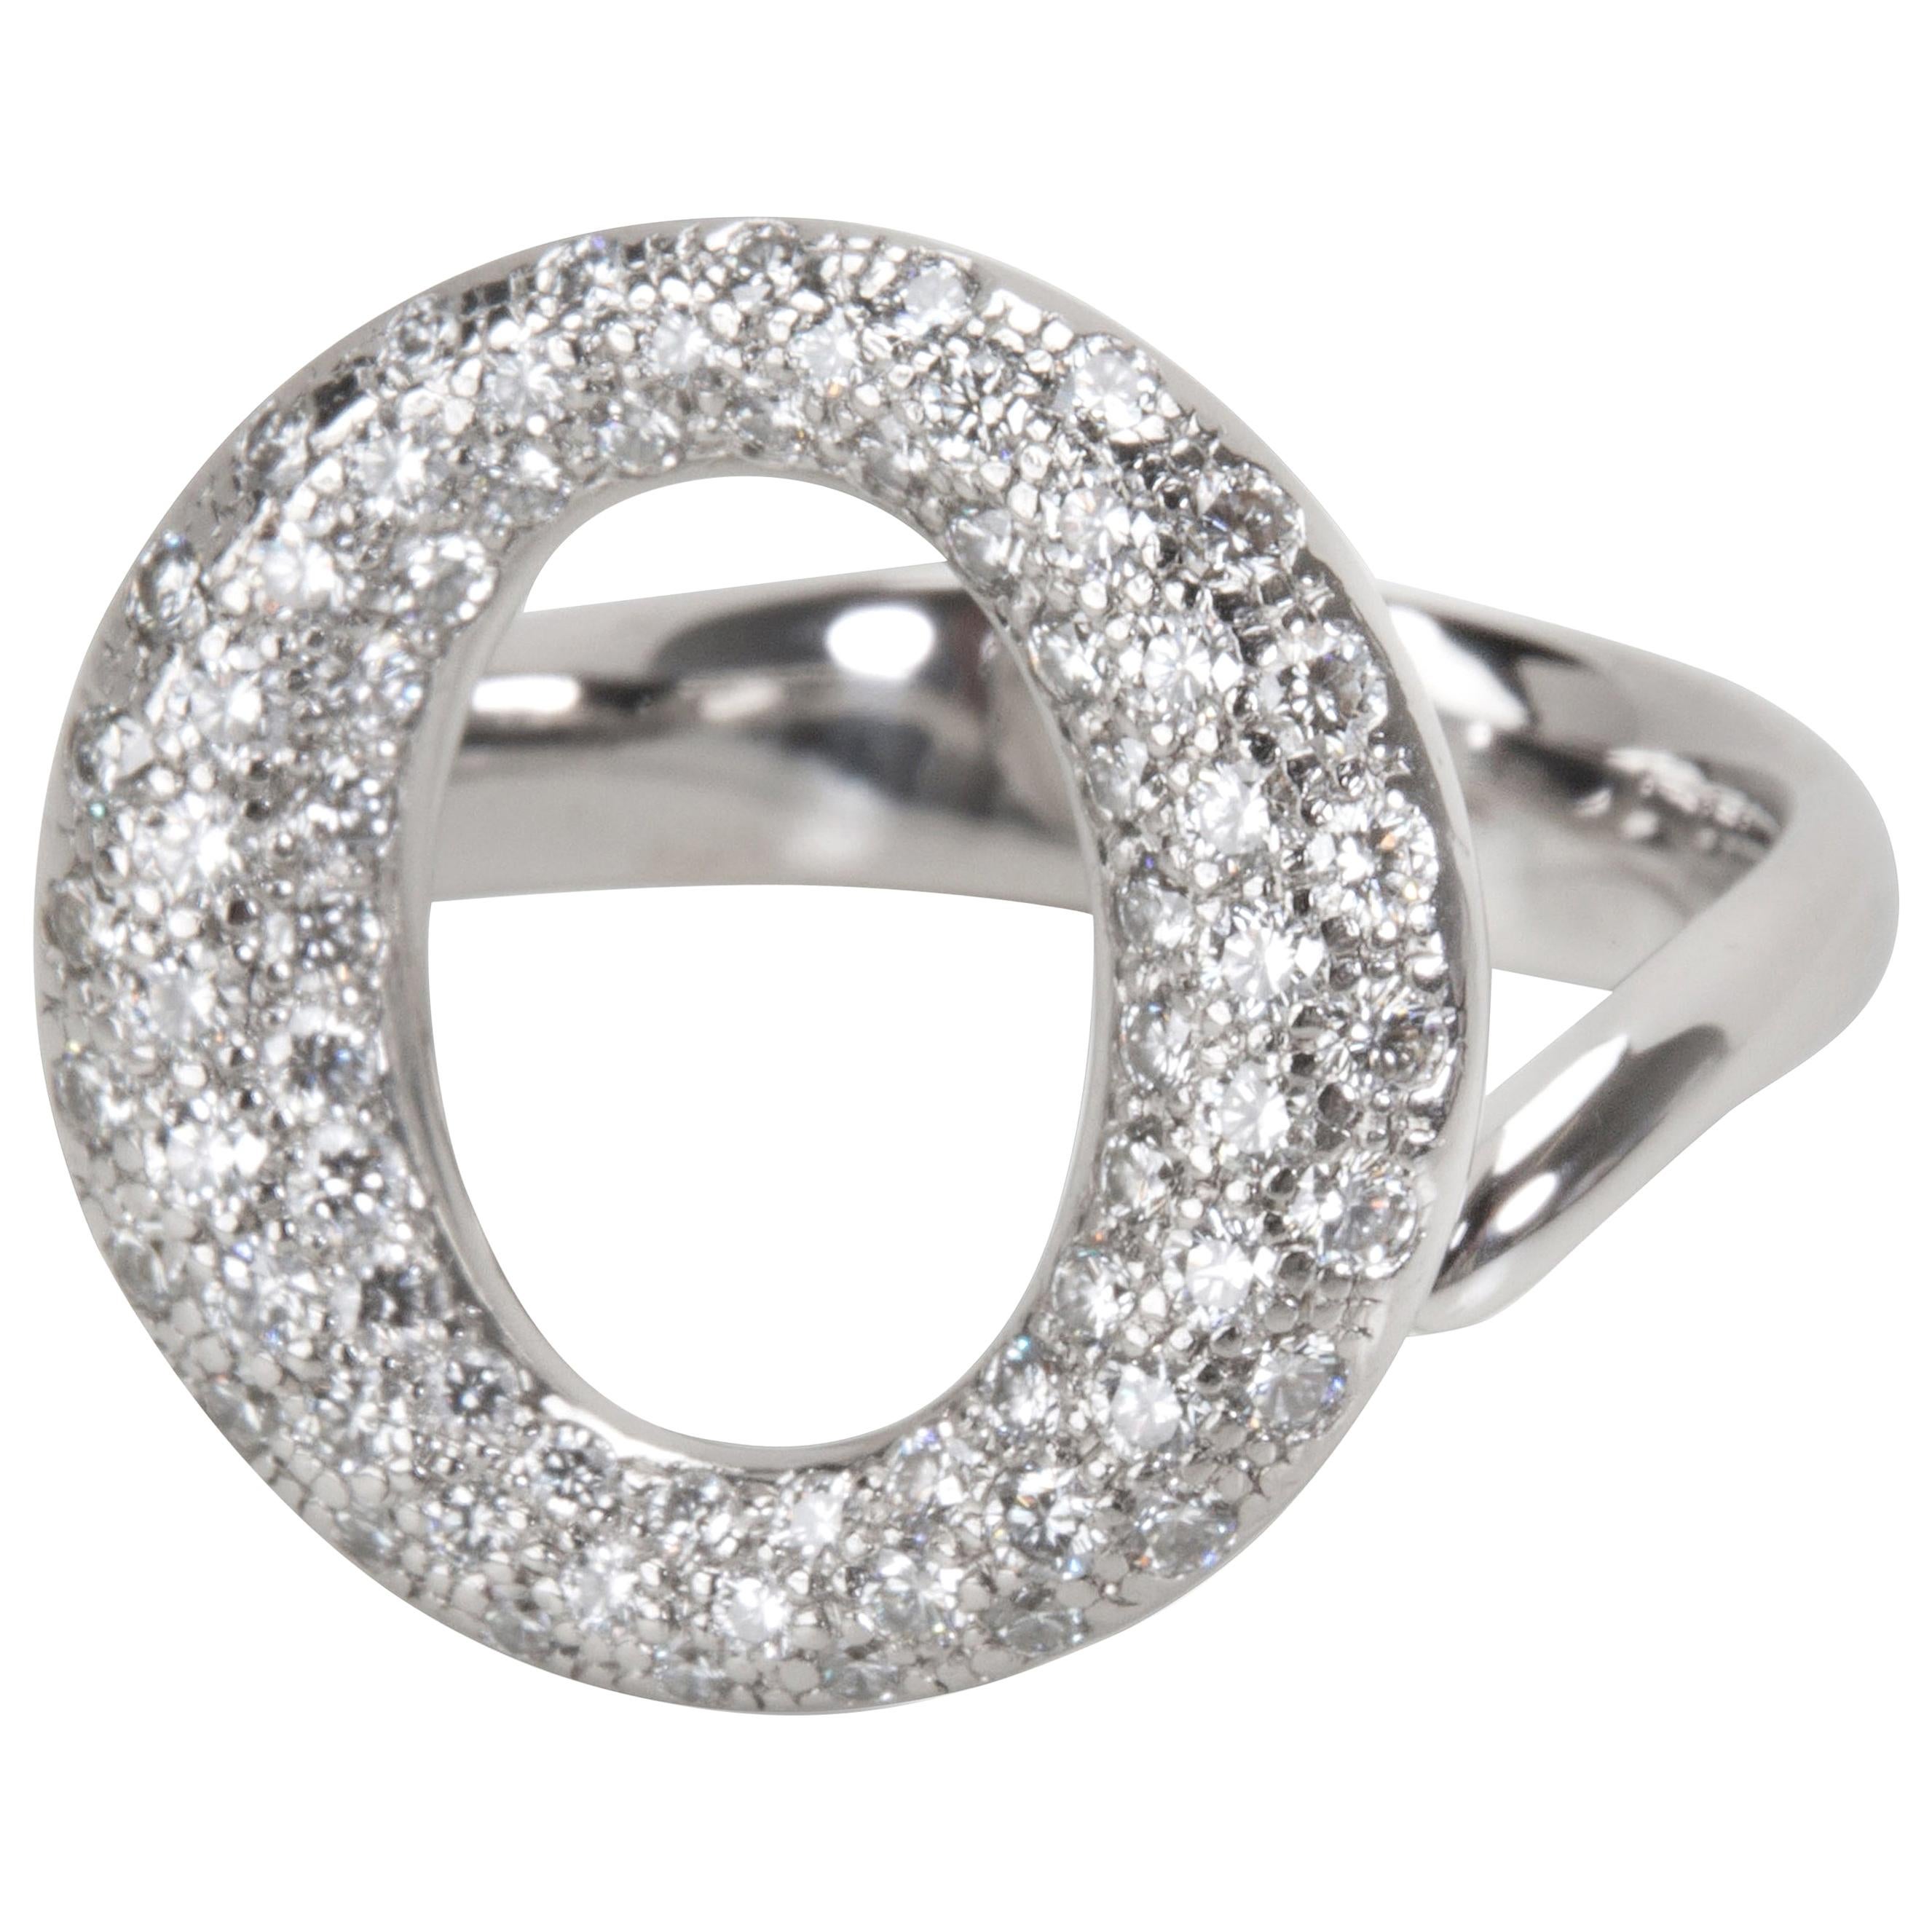 Tiffany & Co. Elsa Peretti Sevillana Diamond Ring in Platinum 0.80 Carat